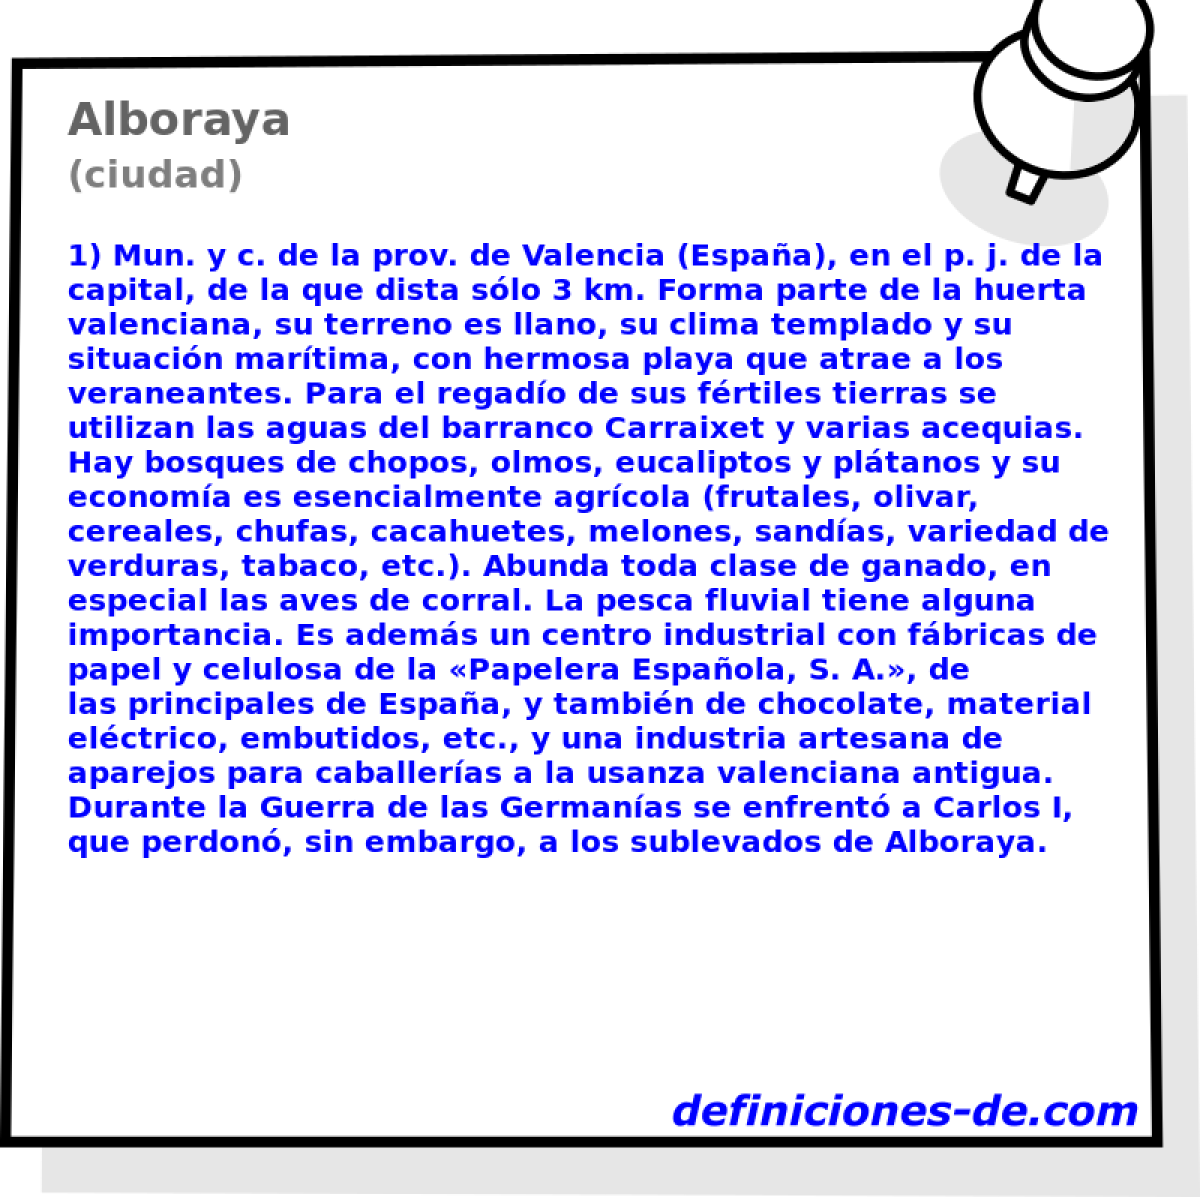 Alboraya (ciudad)